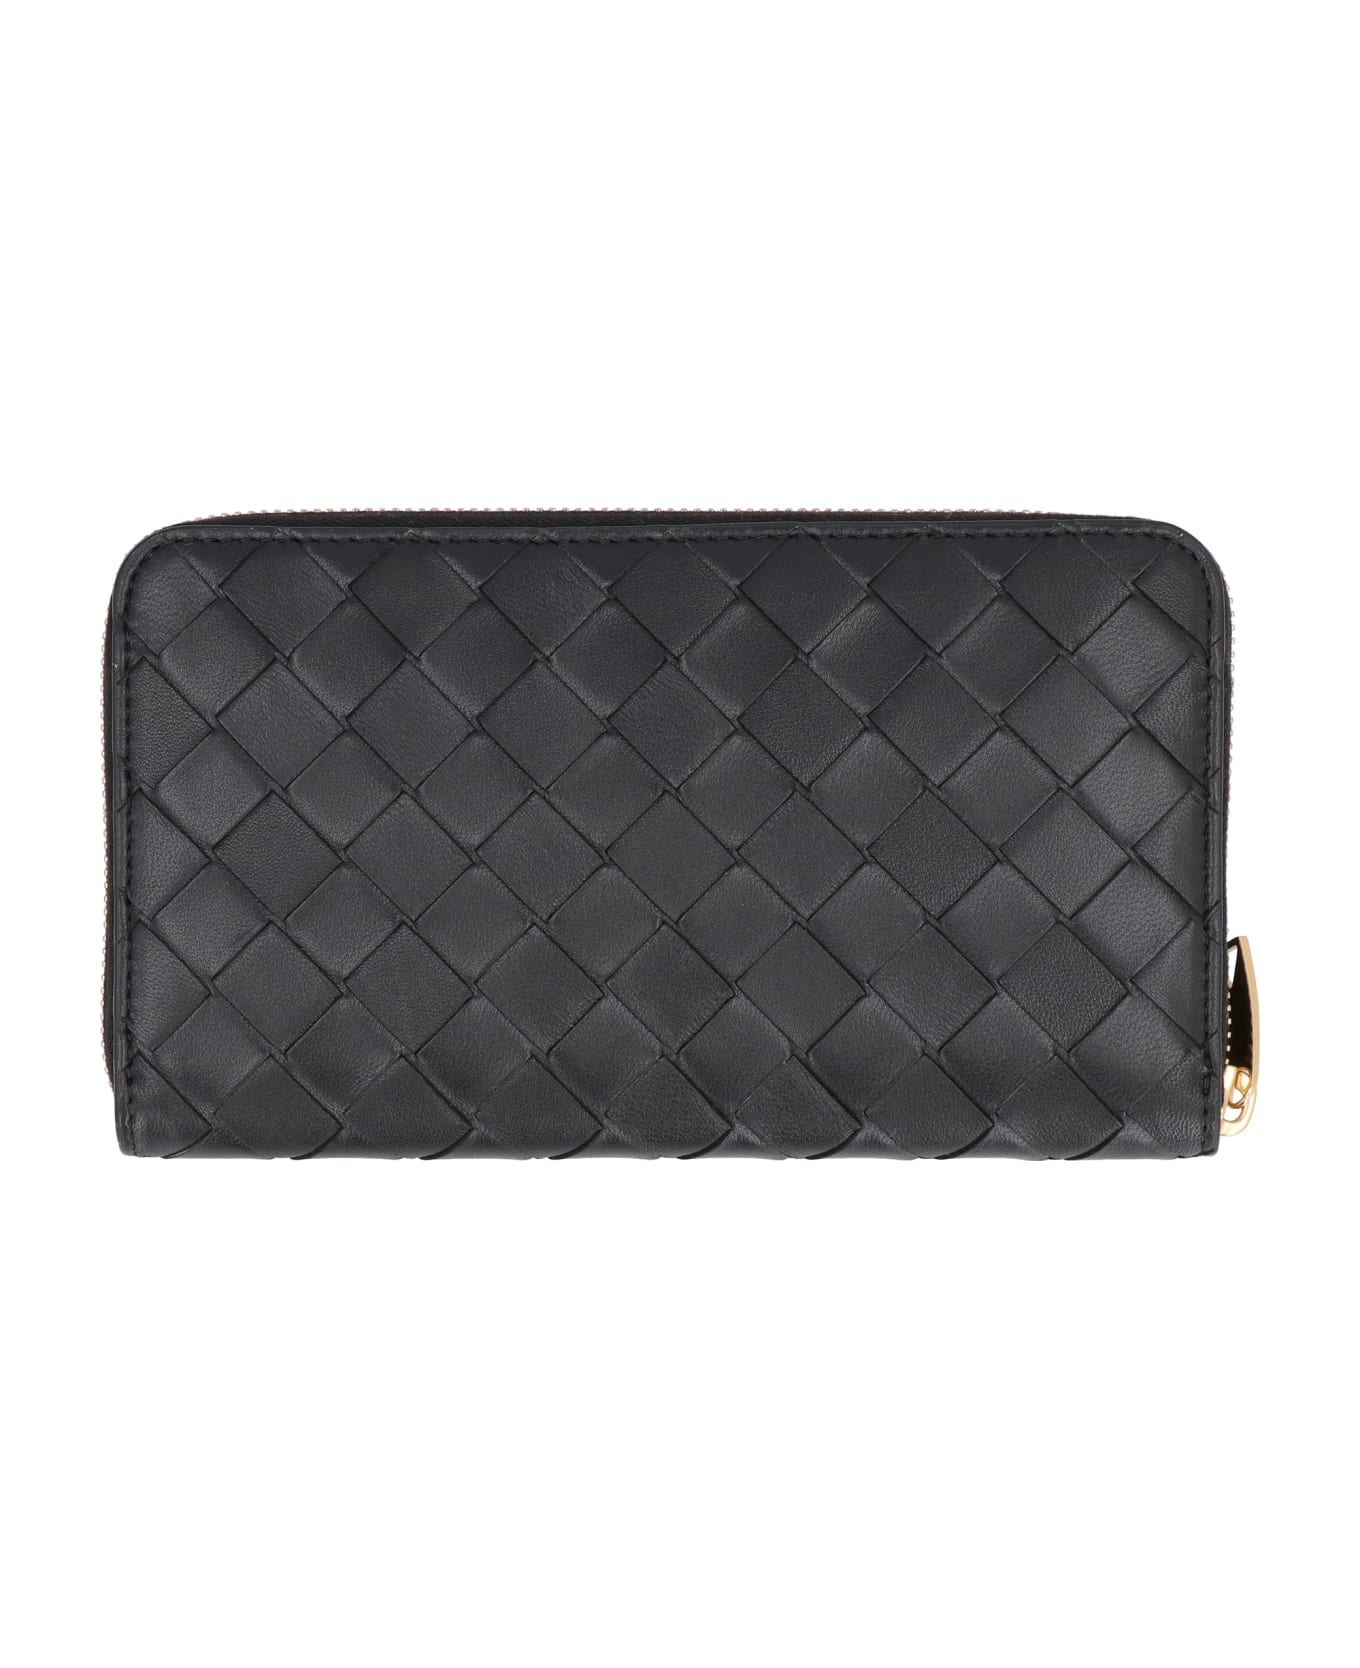 Bottega Veneta Leather Zip-around Wallet - Black Gold